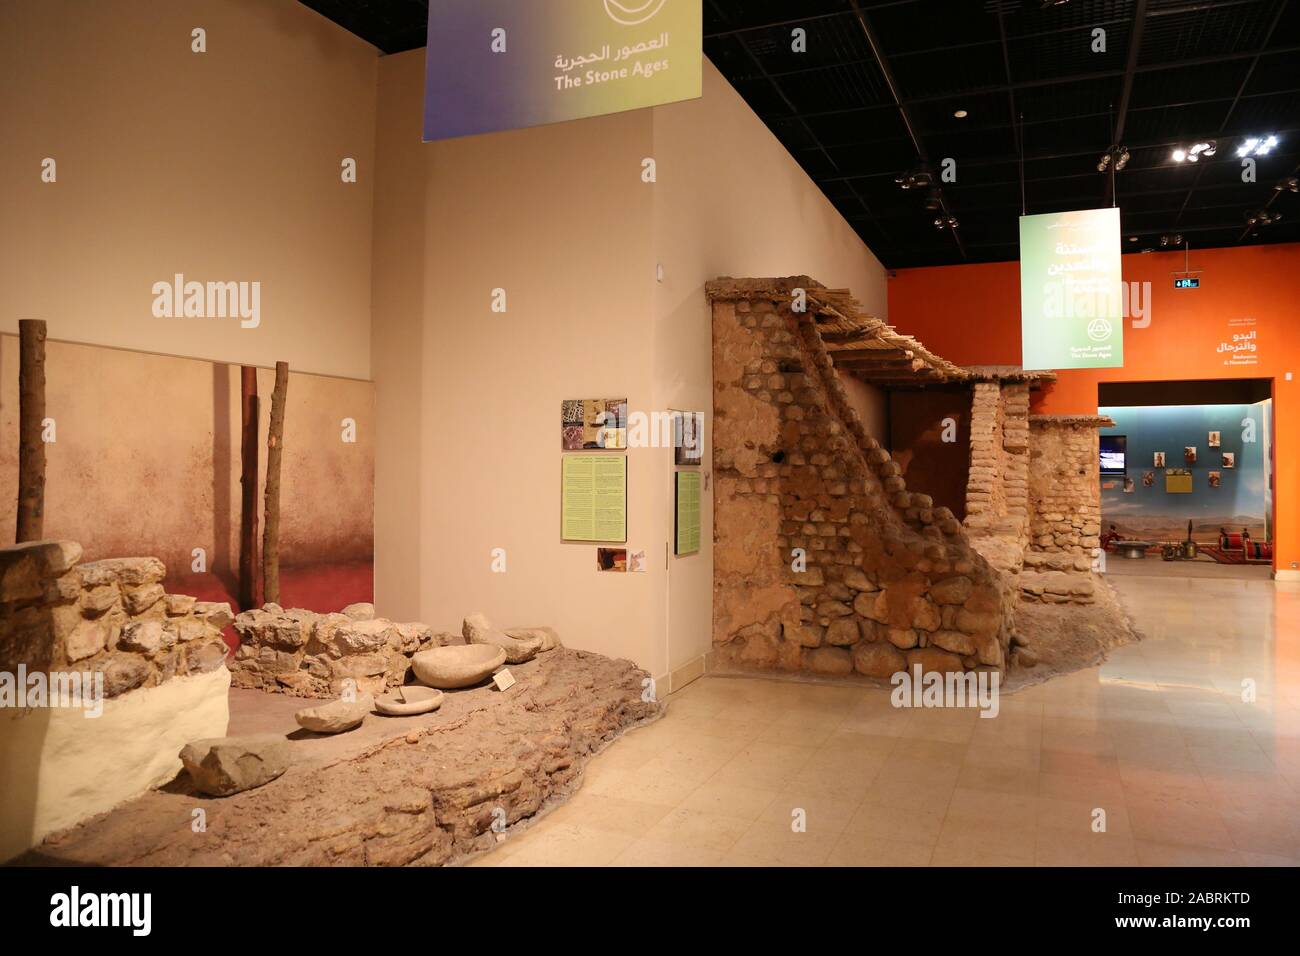 Stone Age display, Jordan Museum, Ali Ibn Abi Talib Street, Ras Al Ain, Amman, Jordan, Middle East Stock Photo